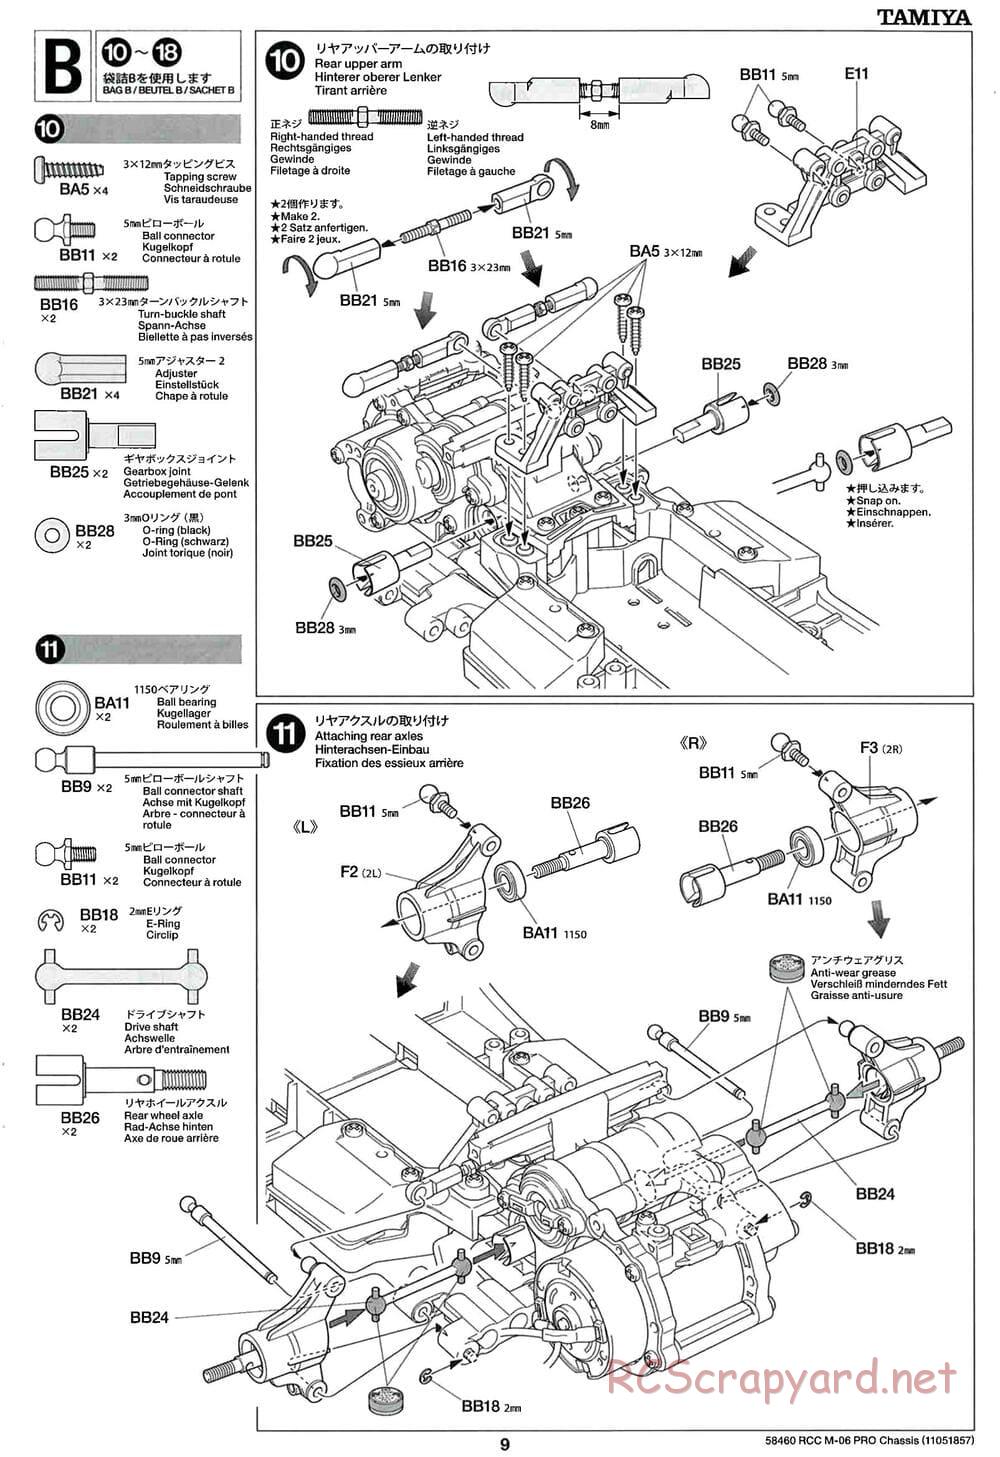 Tamiya - M-06 Pro Chassis - Manual - Page 9